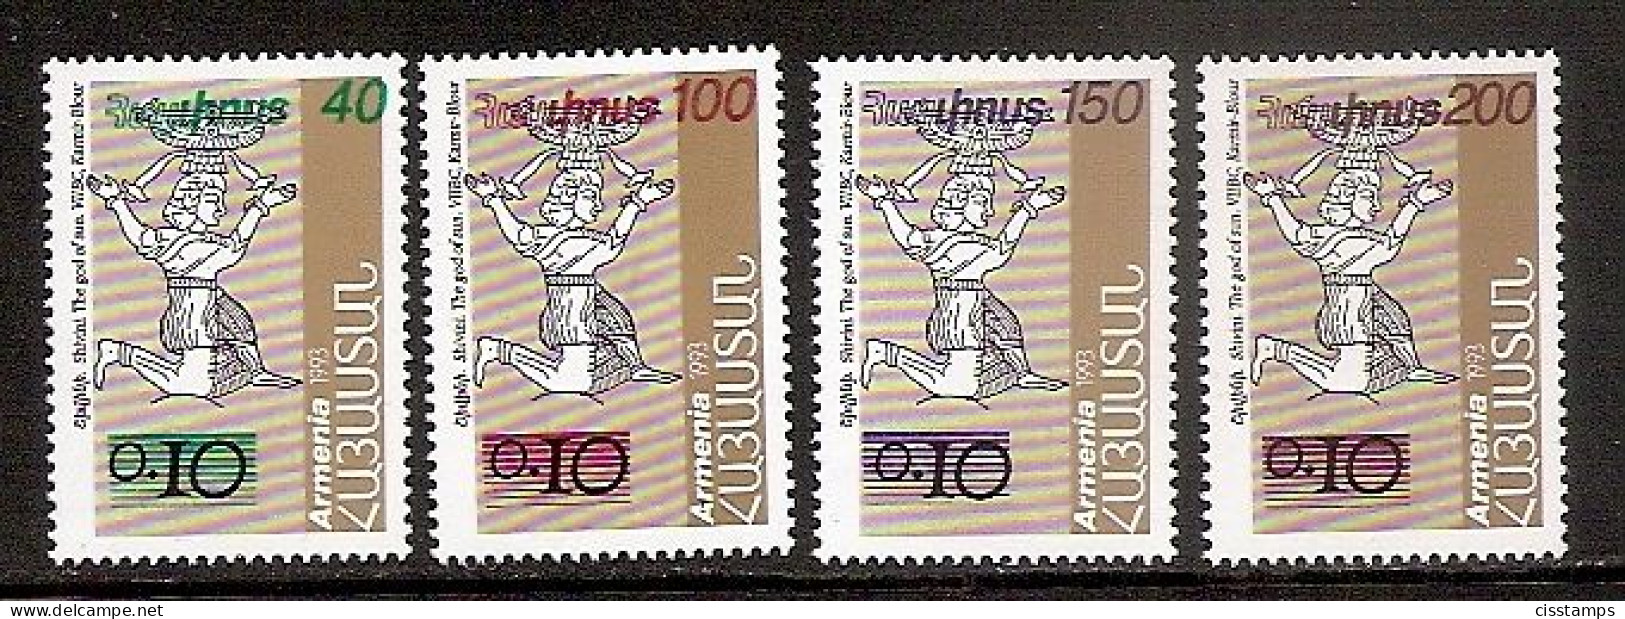 ARMENIA 1996●Definitives Surcharges●Mi276-79 MNH - Armenia